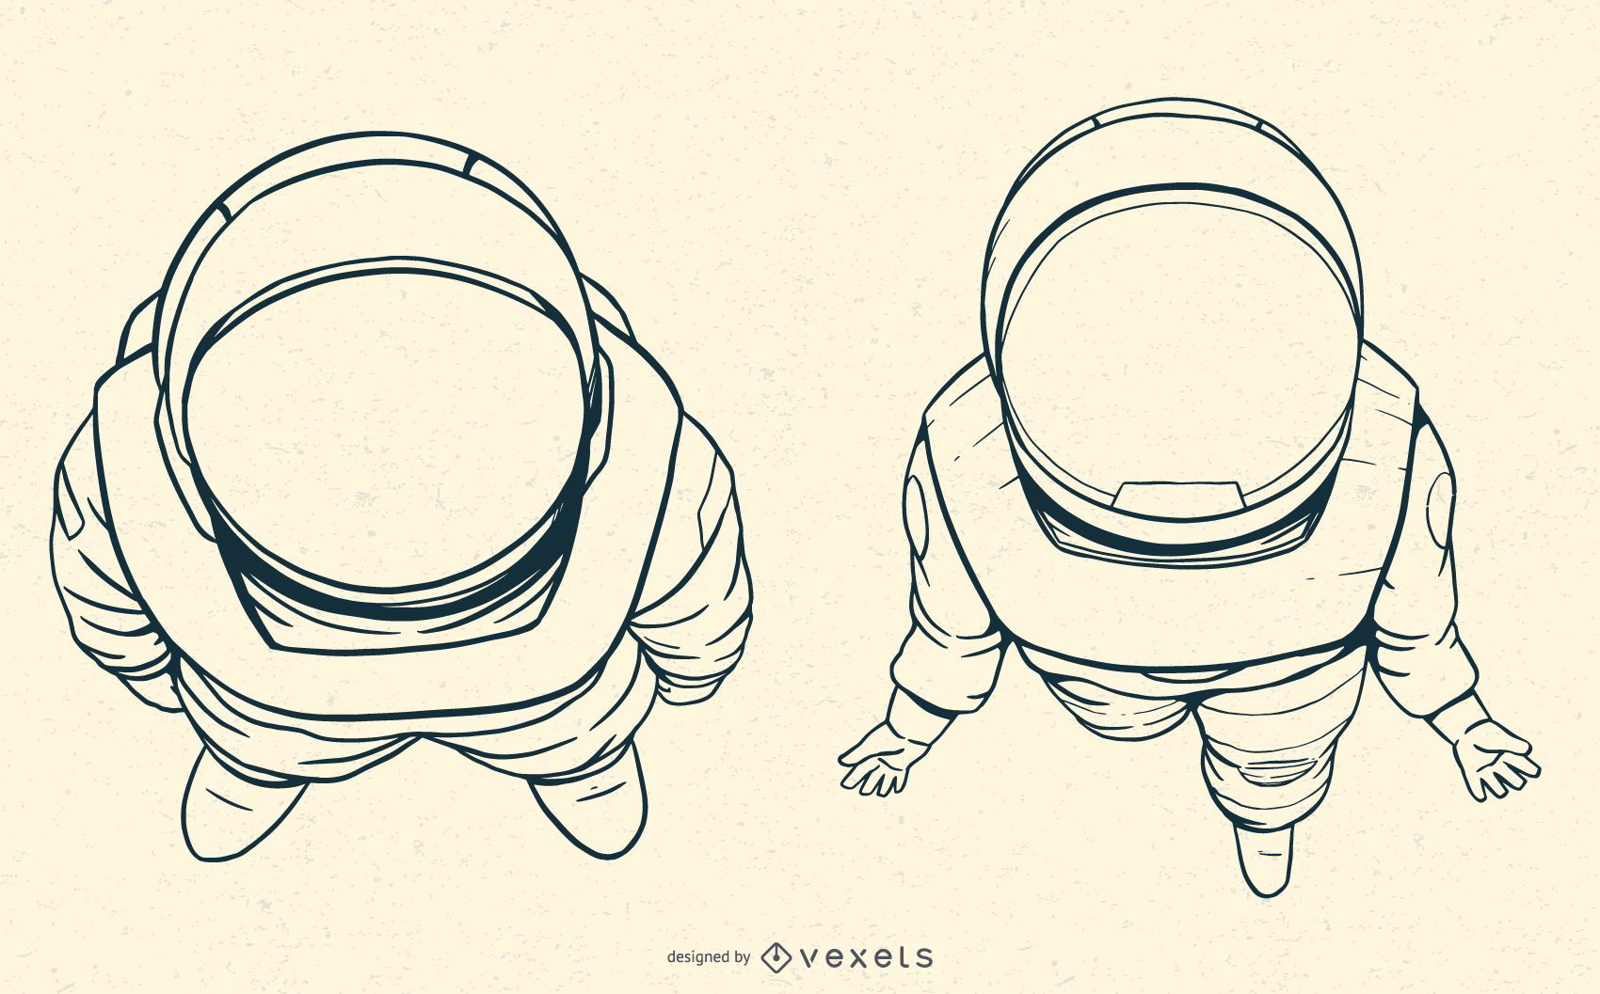 Astronaut hand drawn illustration set